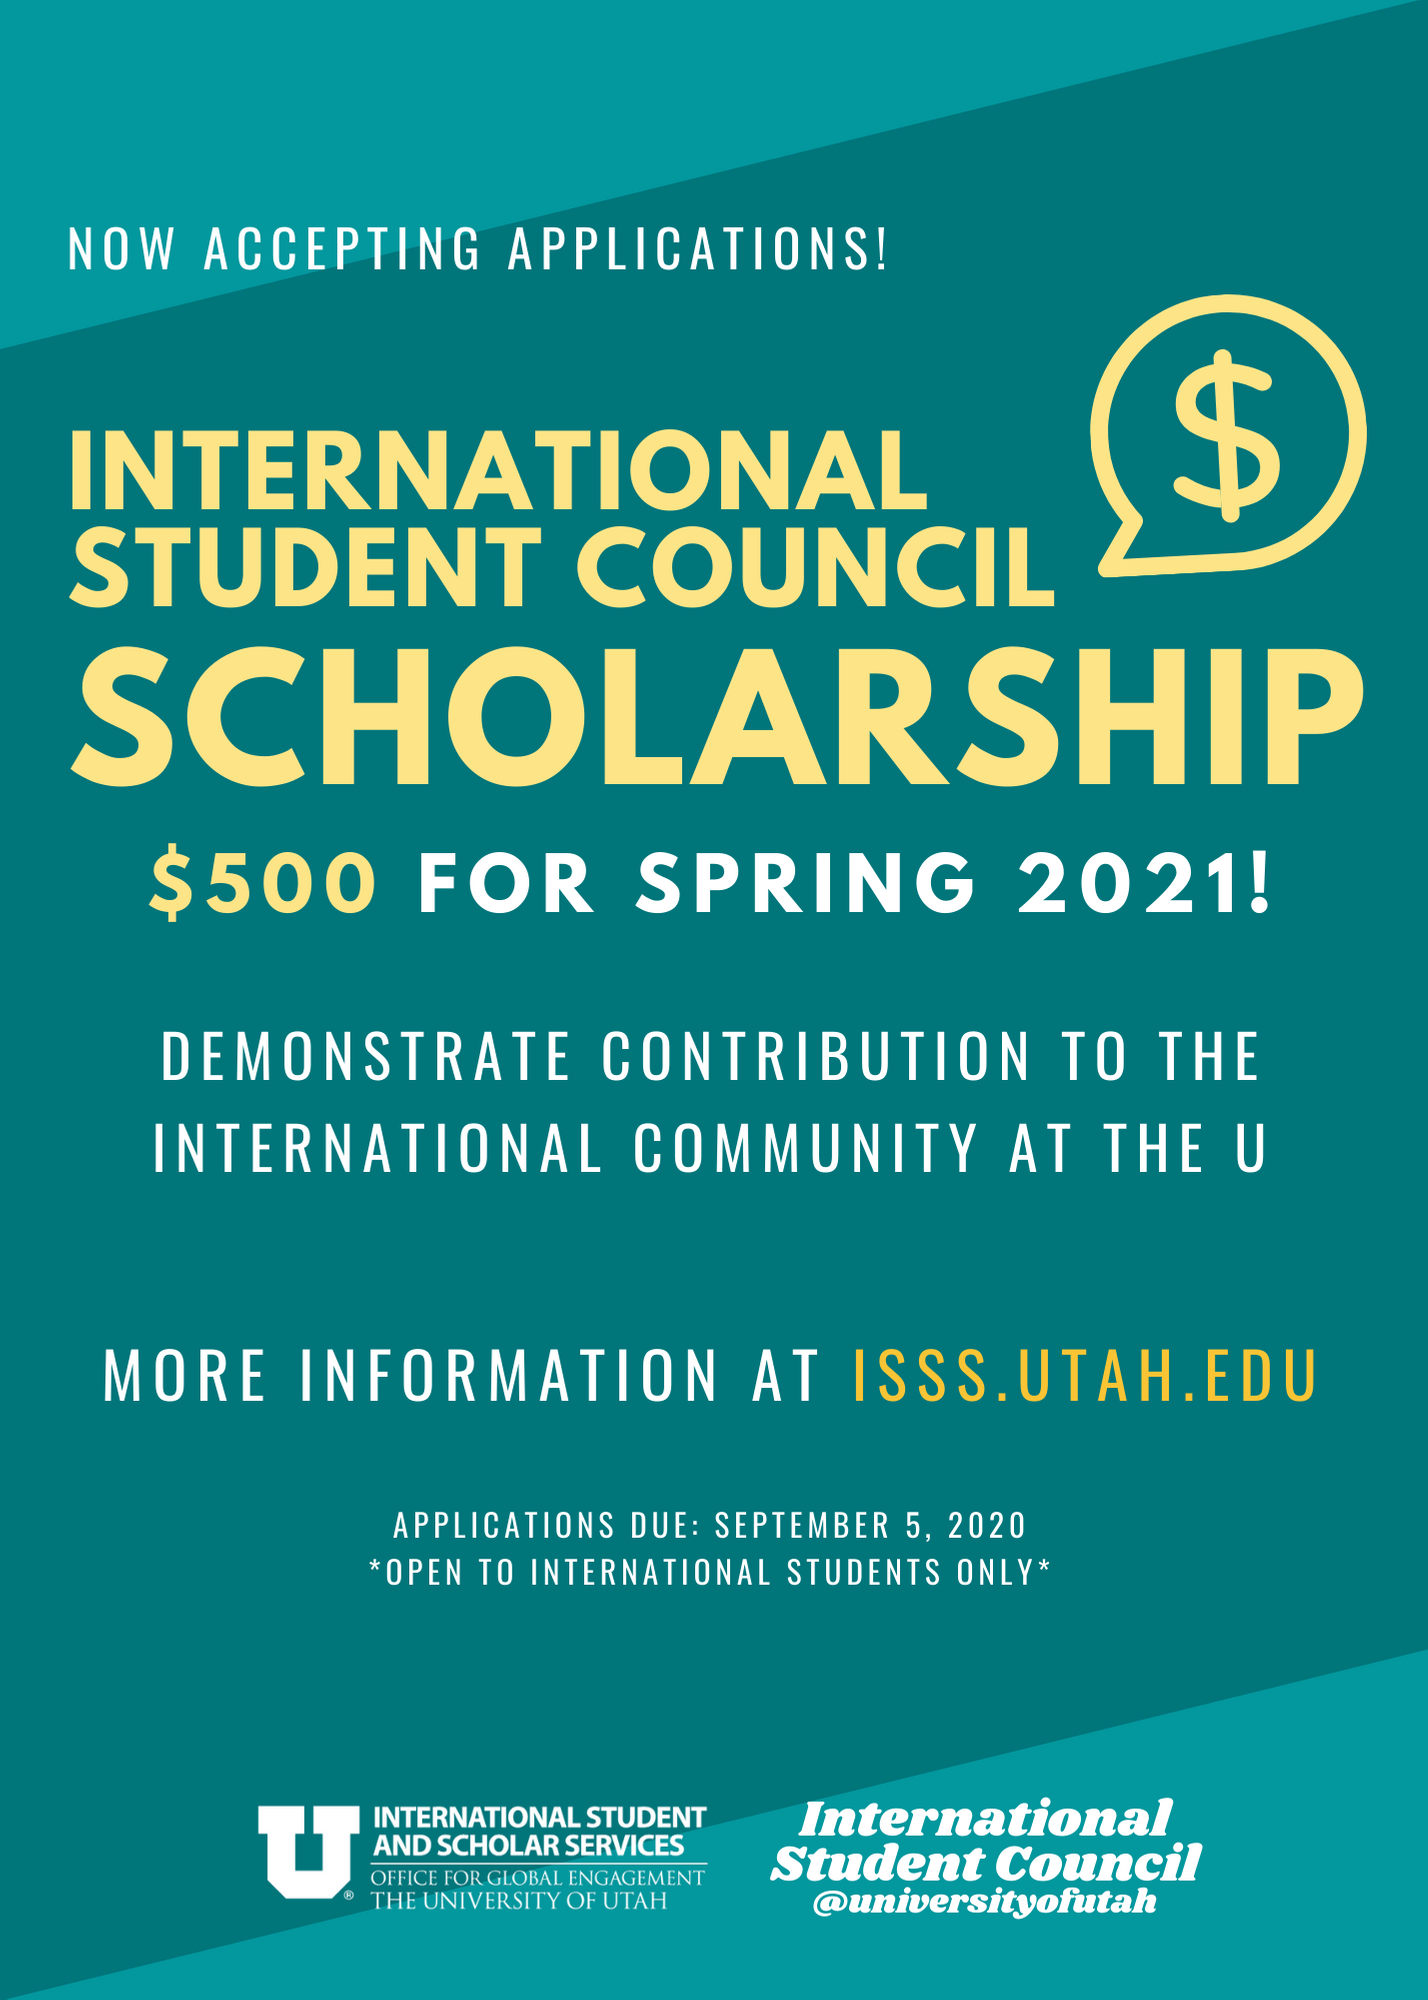 International Student Council International Student Scholar 